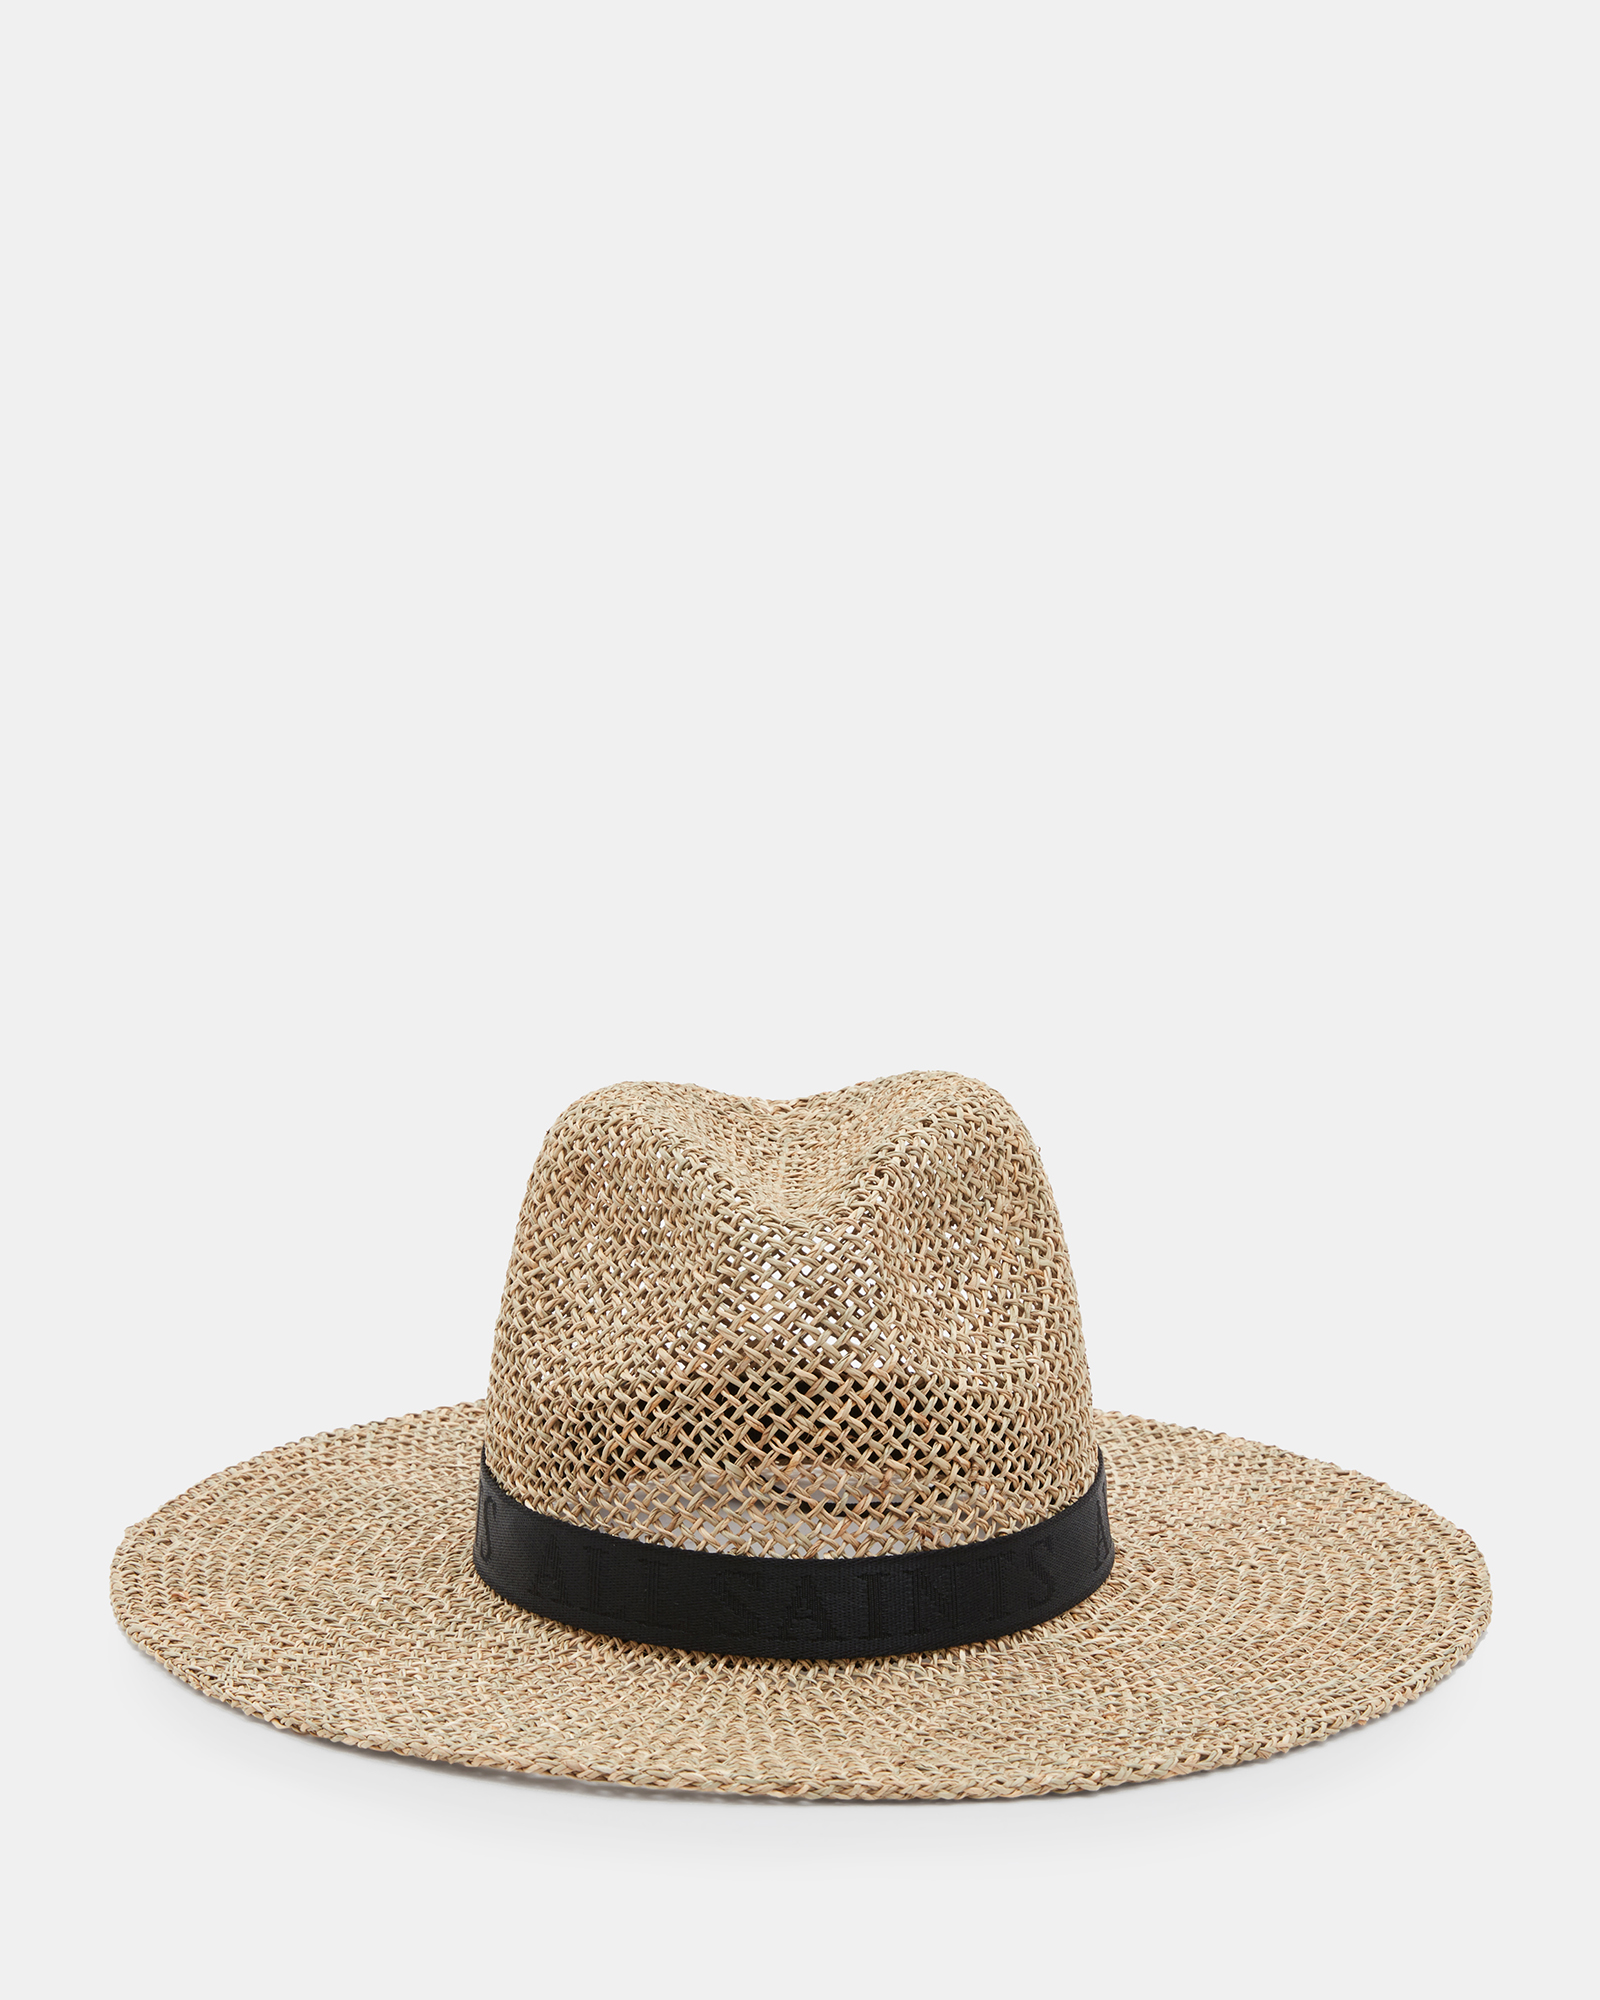 AllSaints Suvi Straw Fedora Hat,, Natural